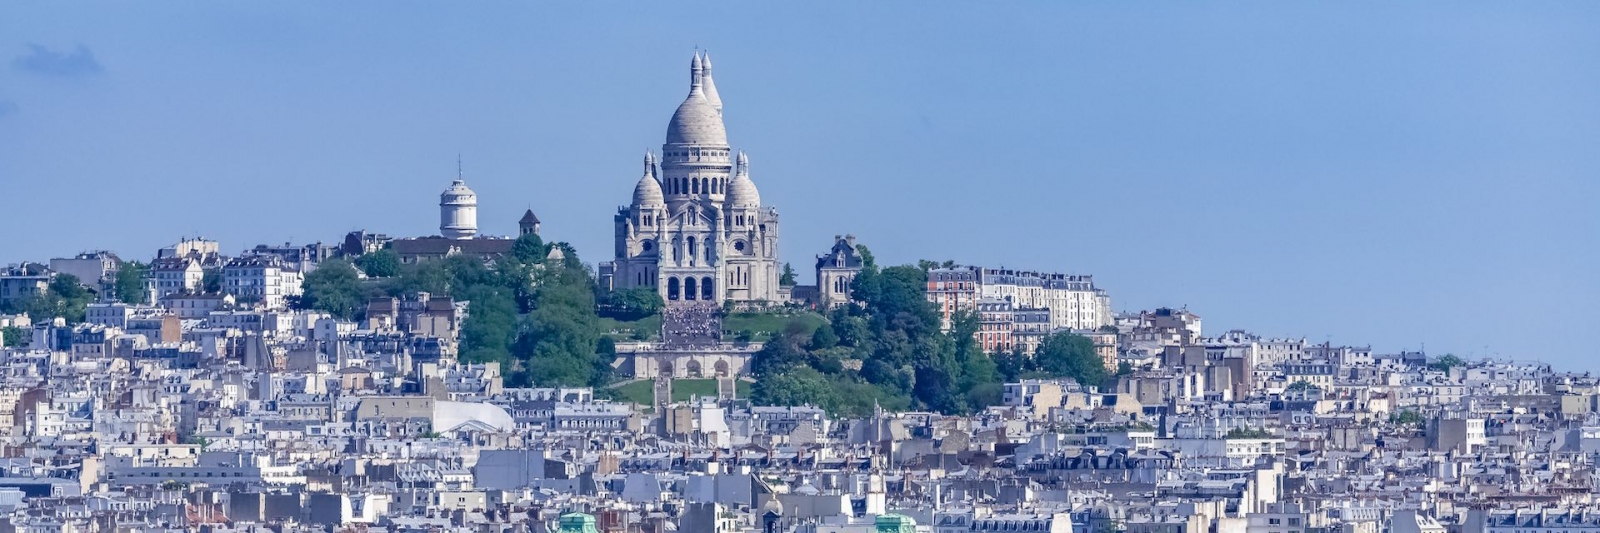 Париж, панорама города, типичные крыши и здания, на фоне Монмартра и базилики Сакре-Кёр.